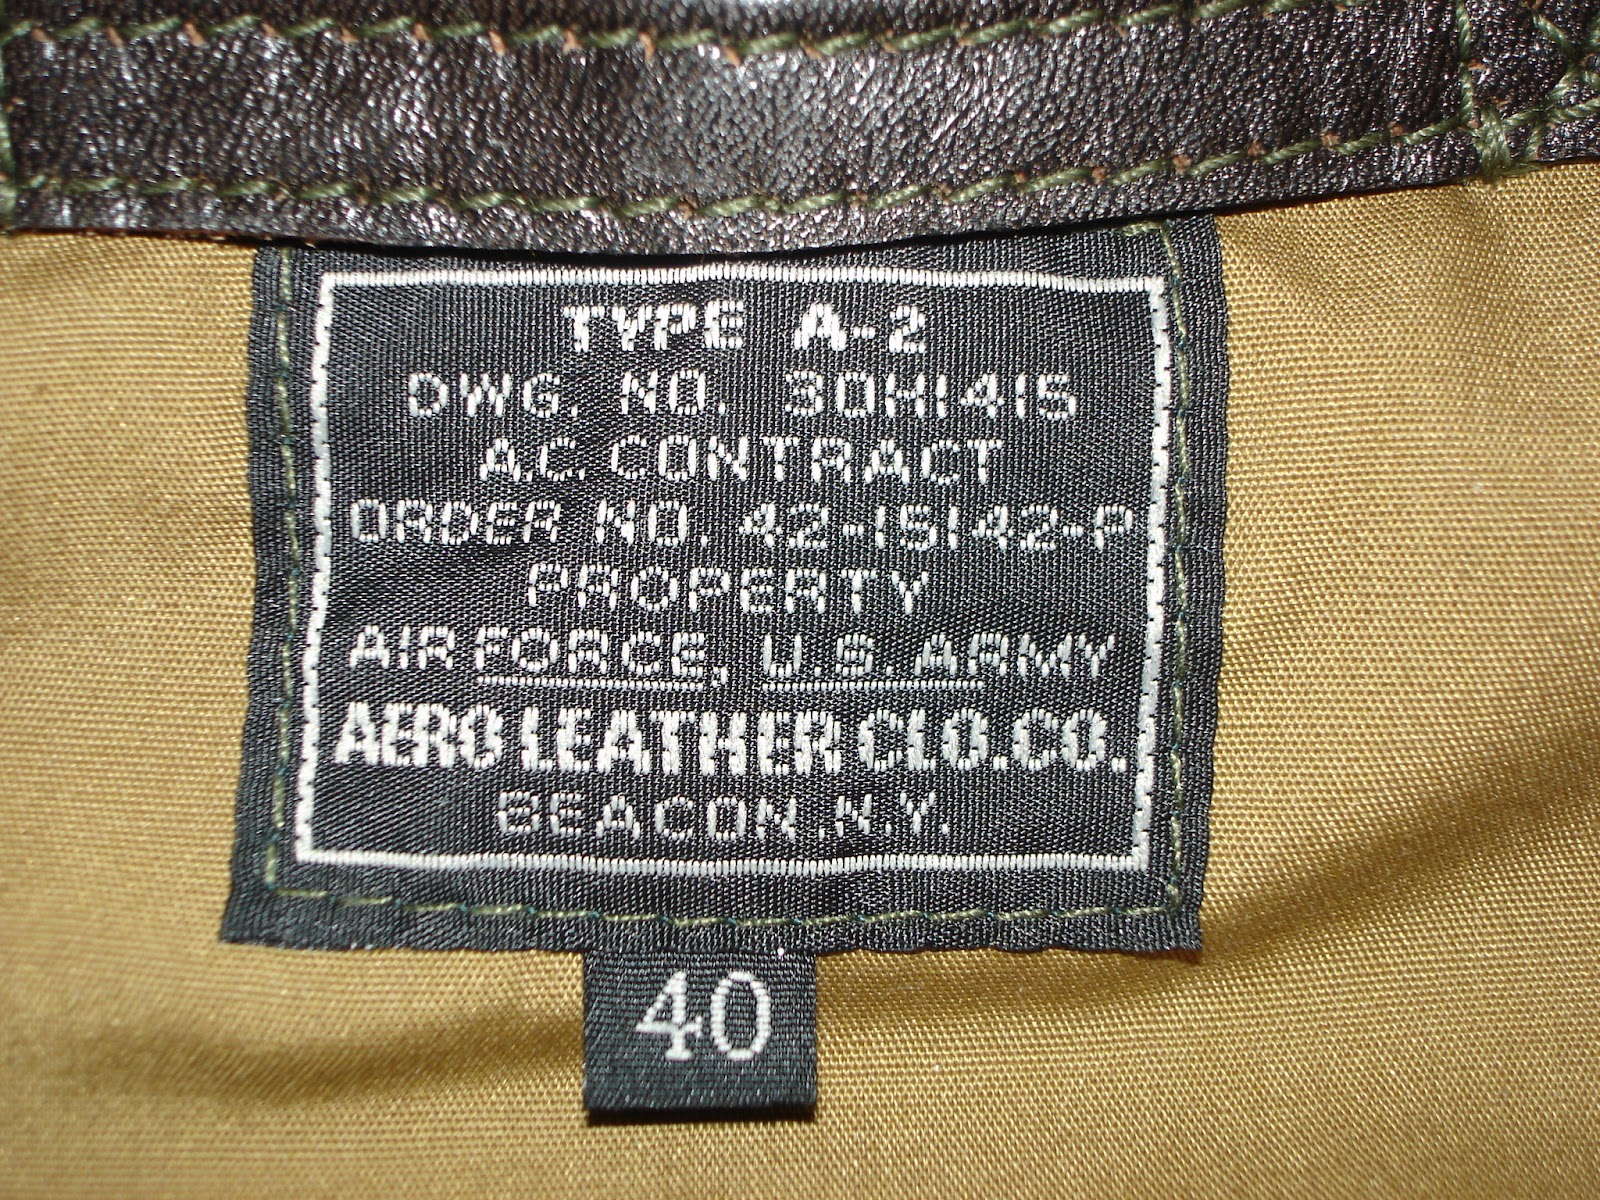 SKYRIDERS: A-2 AERO LEATHER CLOTHING COMPANY BEACON N.Y. 42-15142-P ...